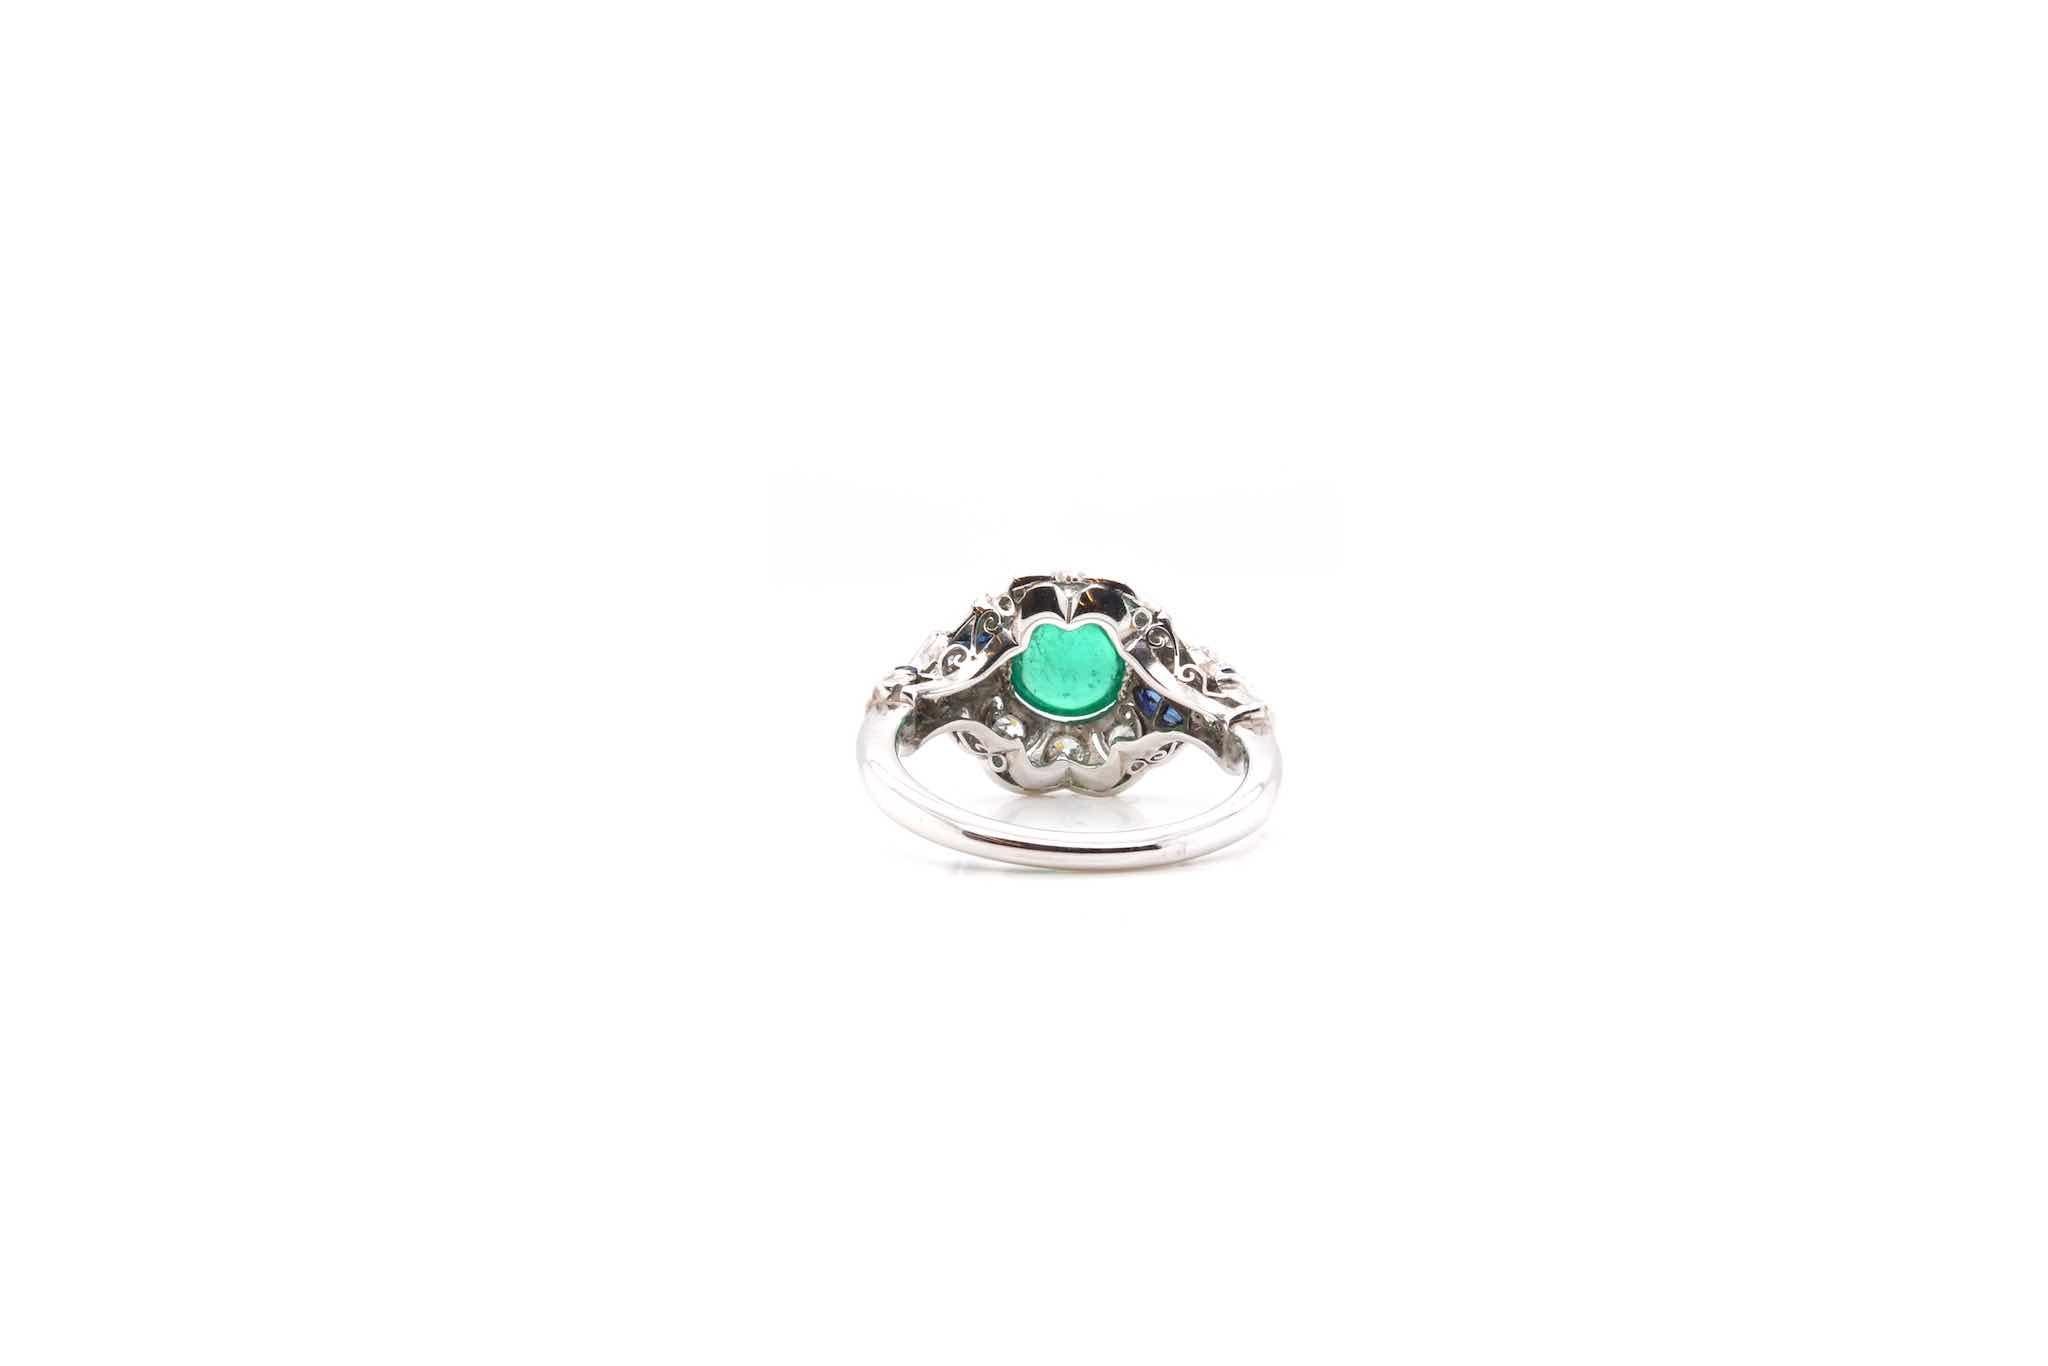 Cabochon emerald, brilliant cut diamonds and sapphires ring For Sale 1